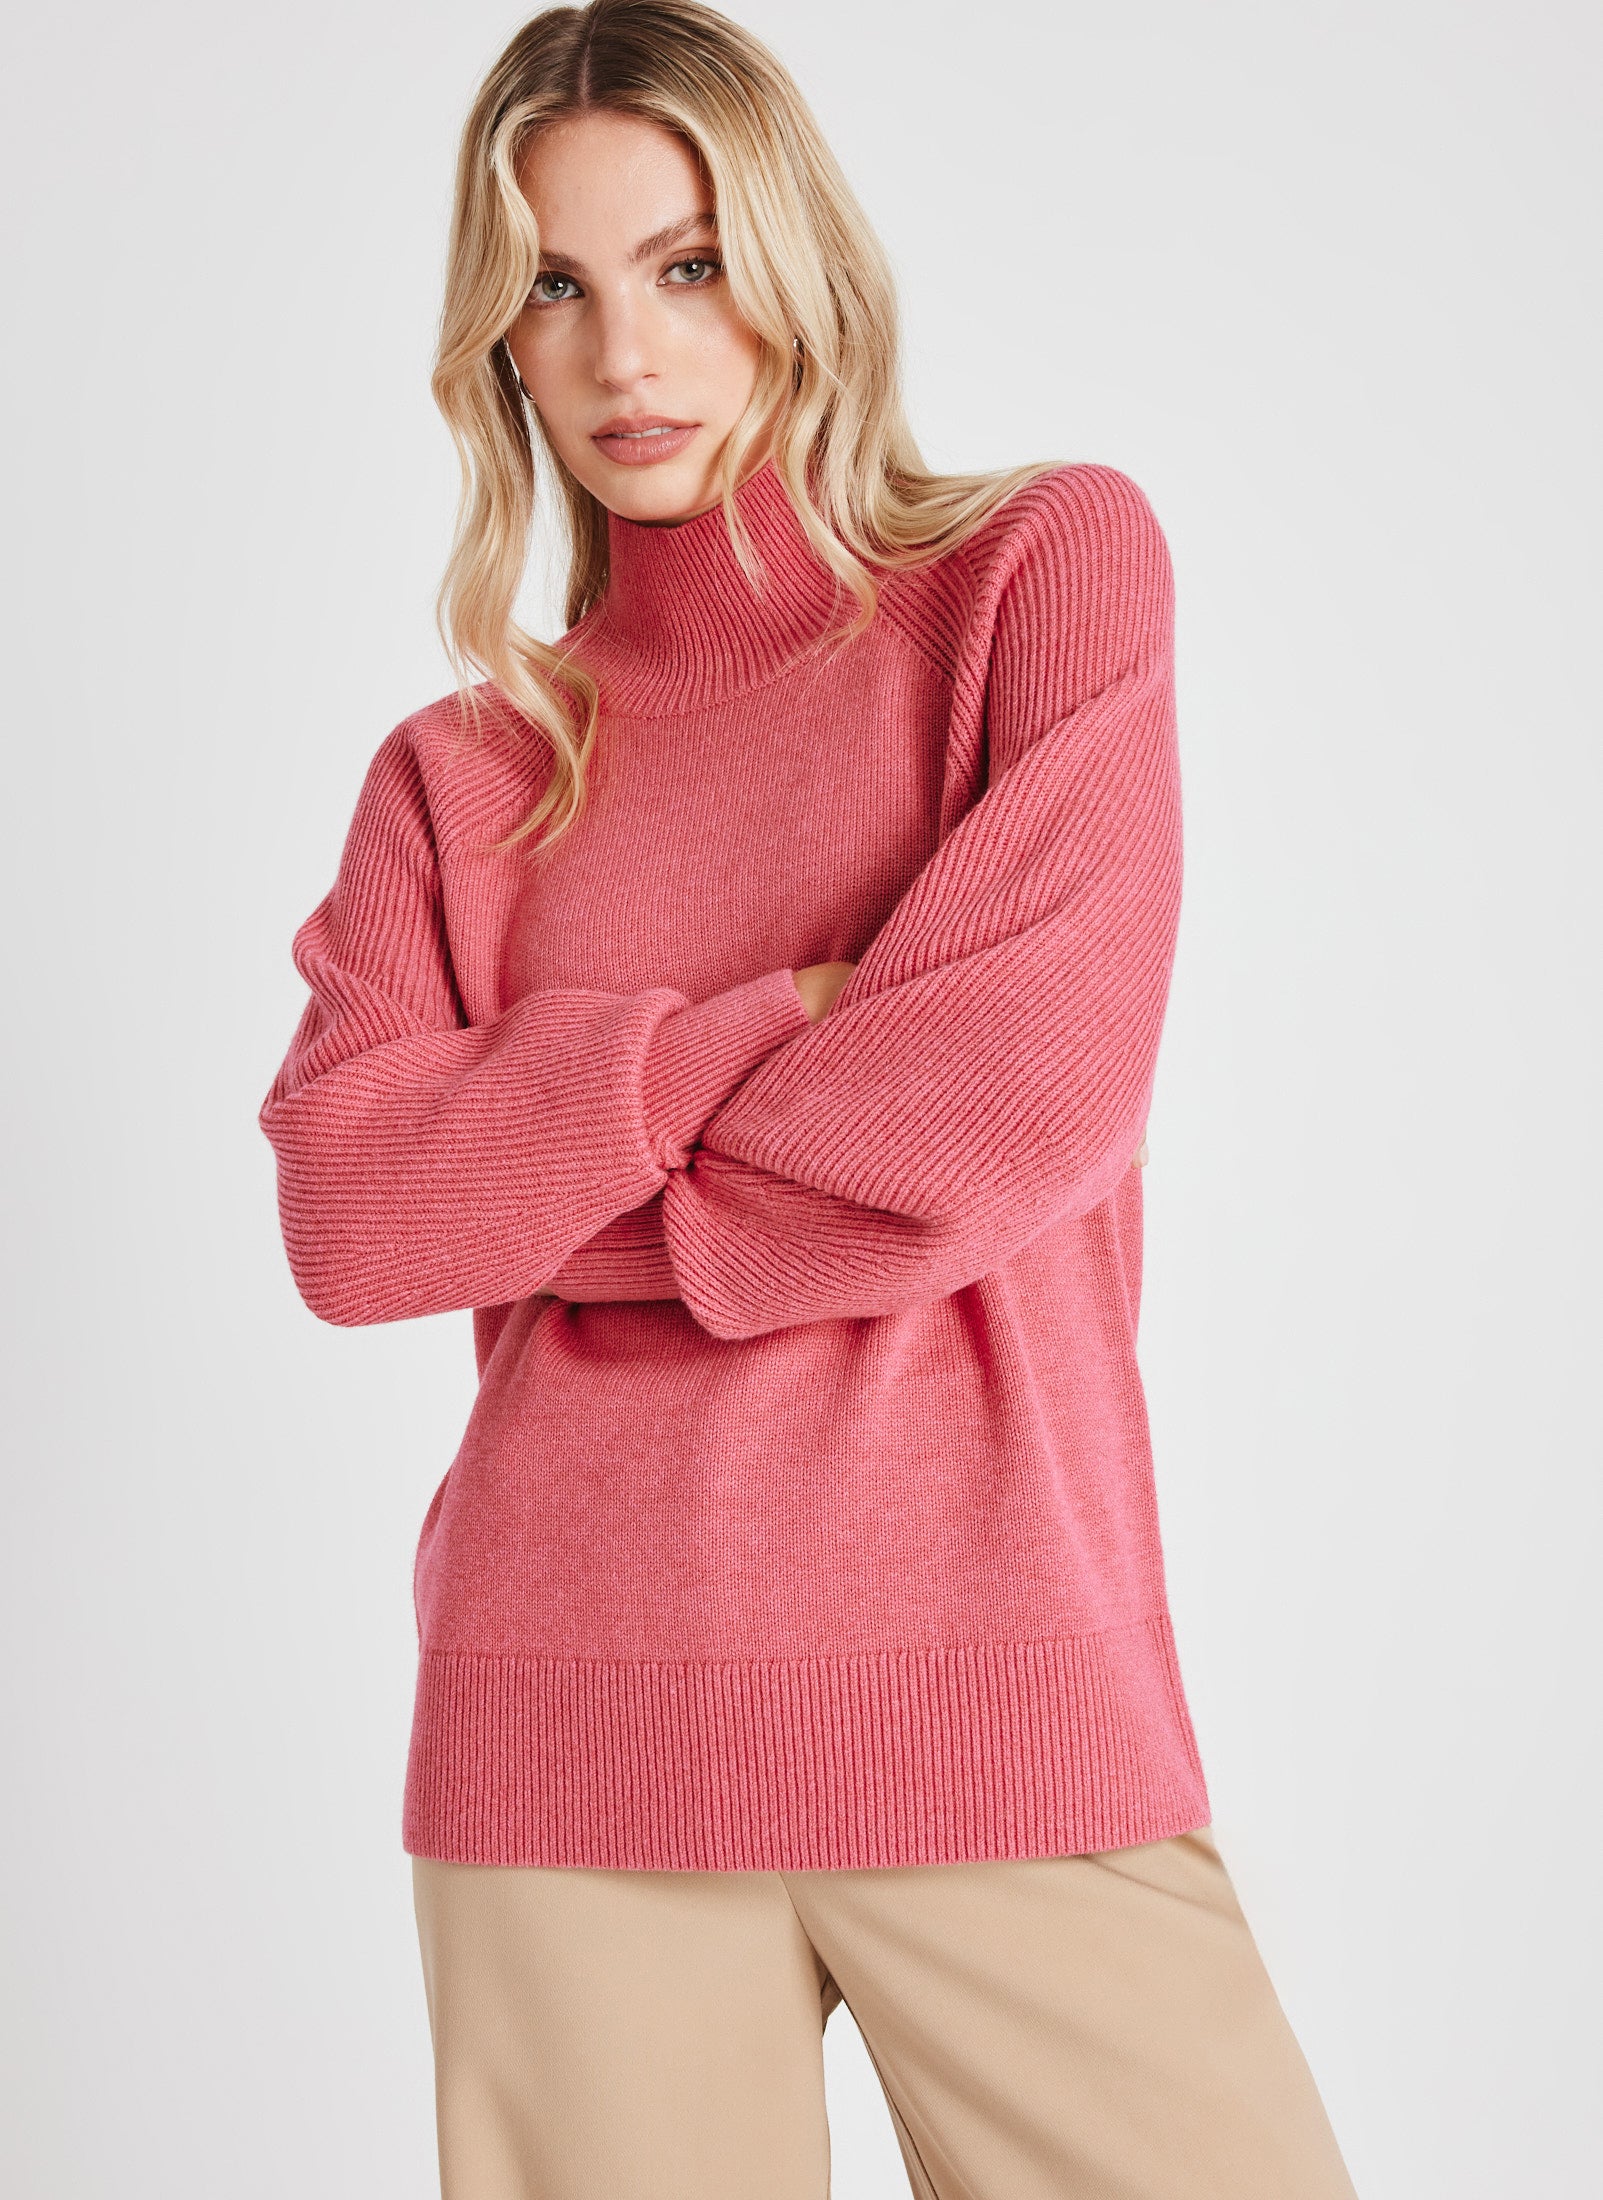 Kit and Ace — Sophia Merino Turtleneck Sweater